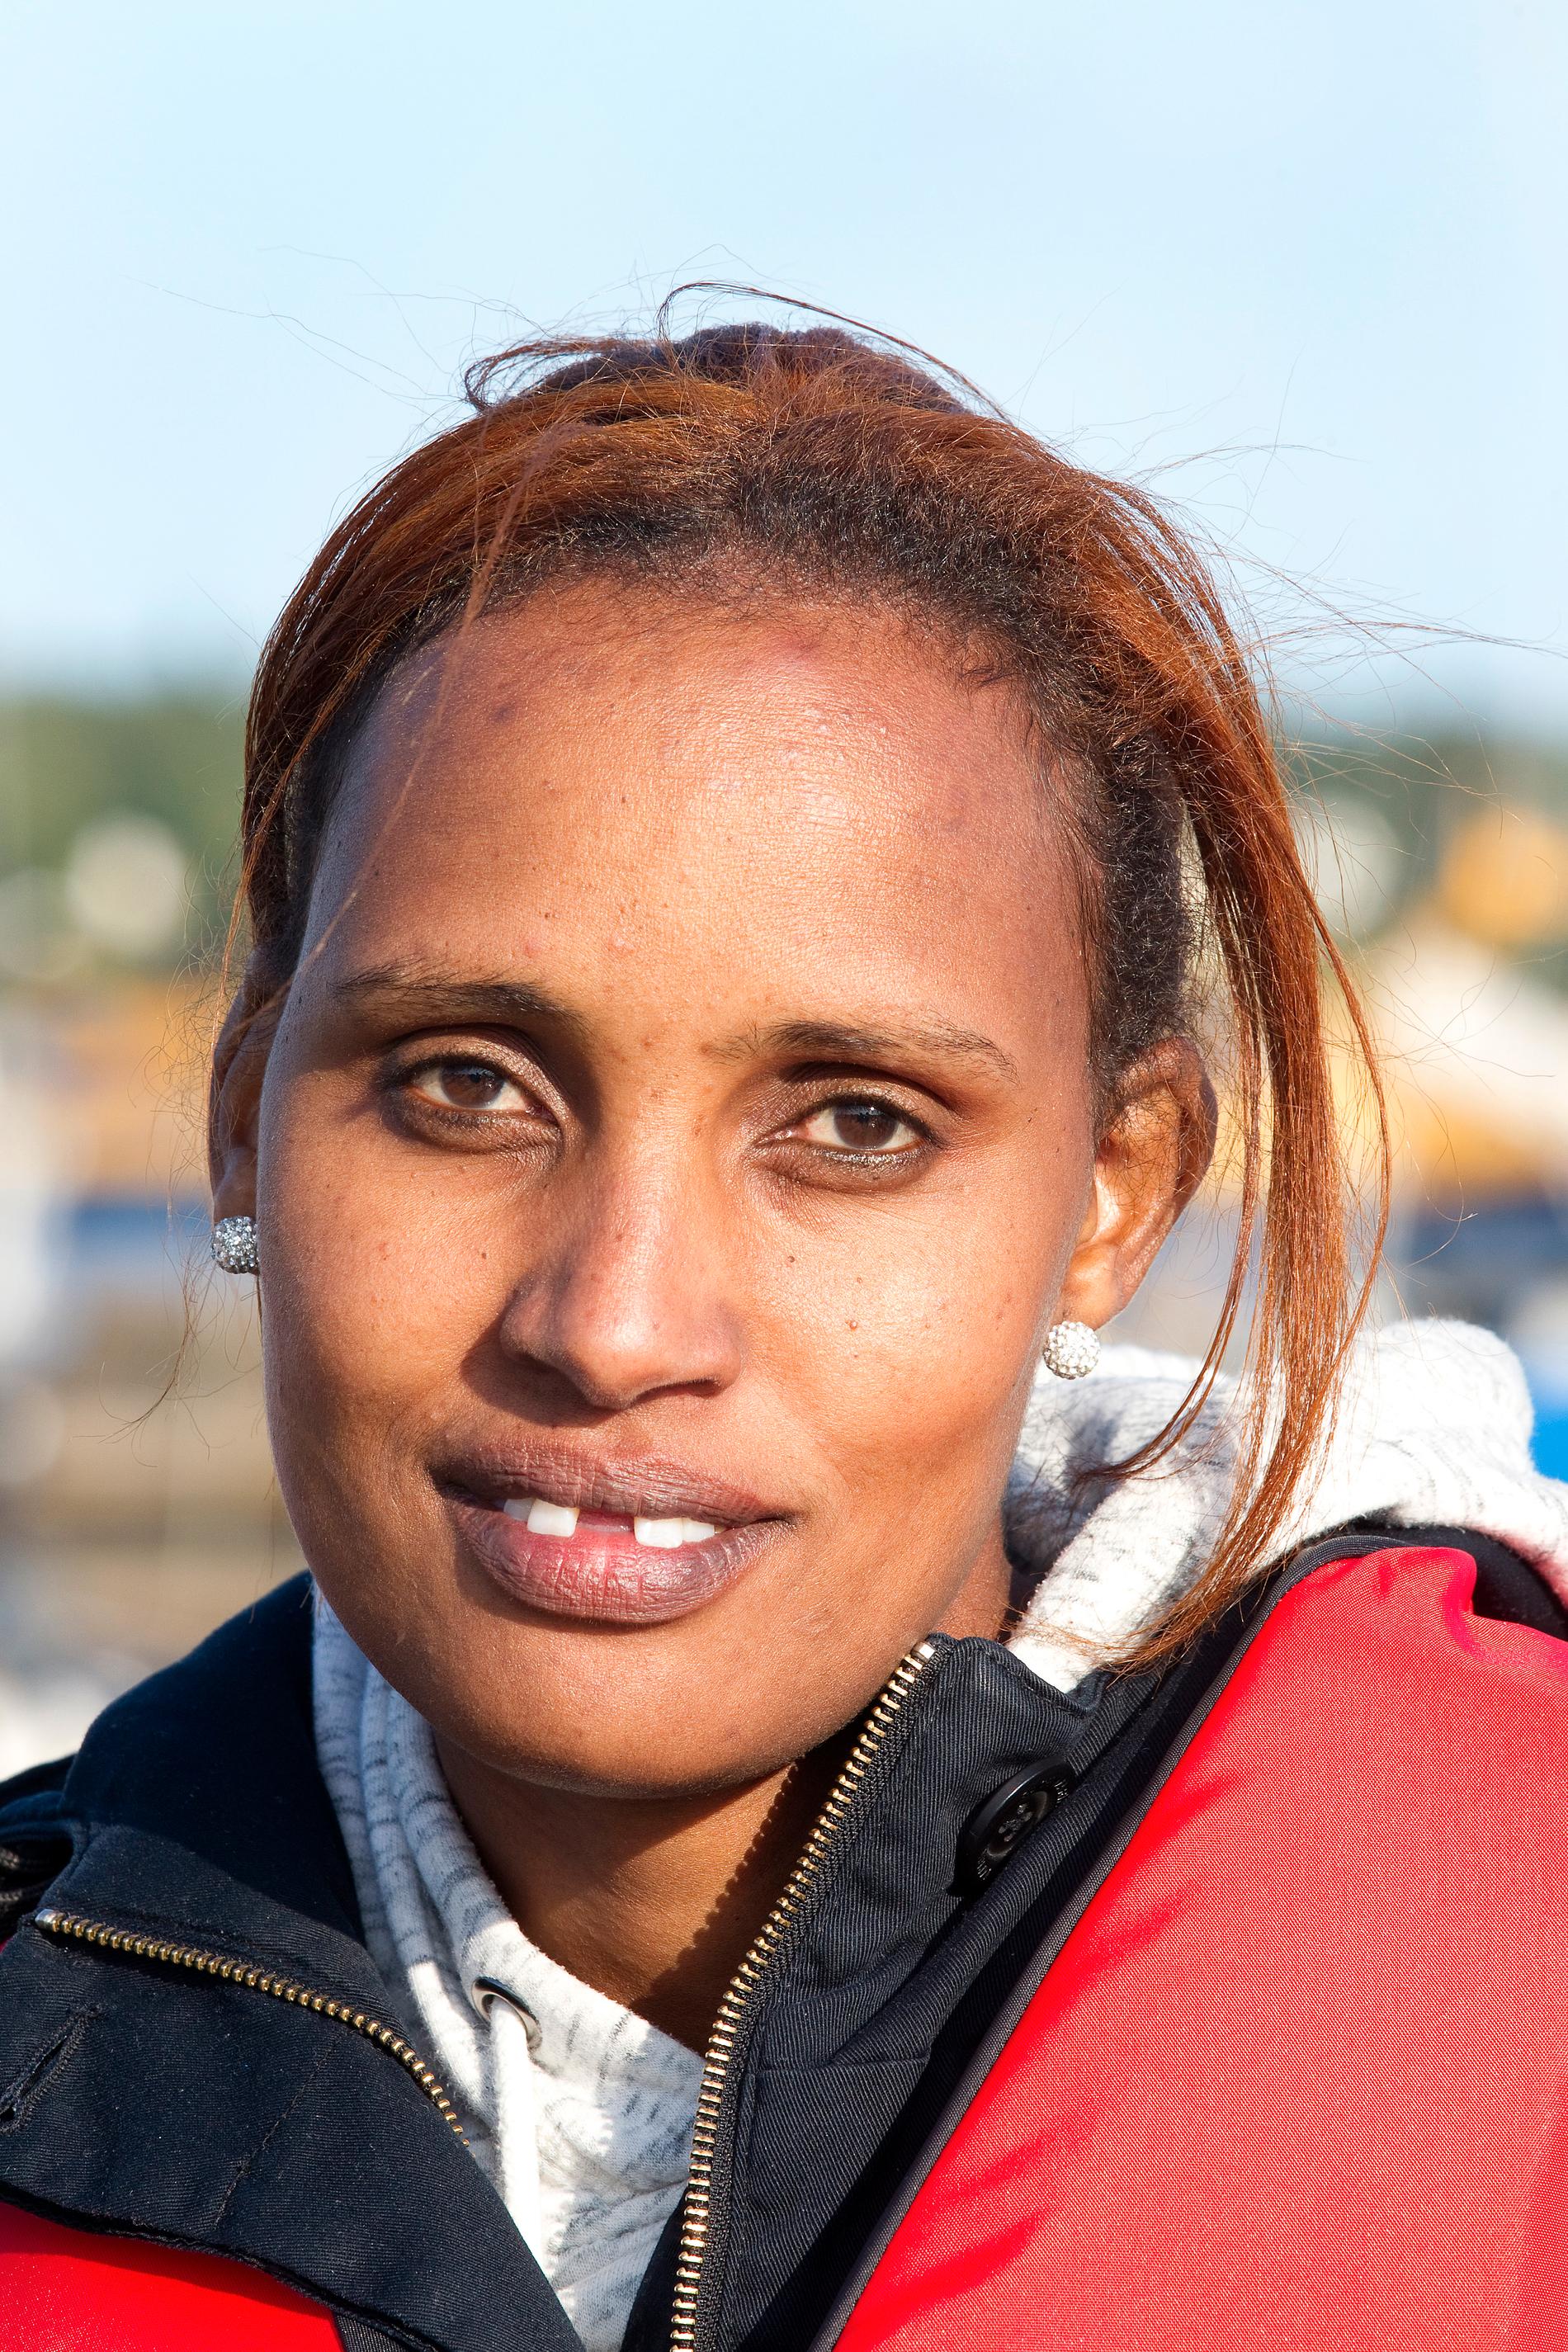 Rgat Andestion flydde till Sverige från Eritrea via Medelhavet. Seglingen med Simon har gett henne fina erfarenheter från havet. 